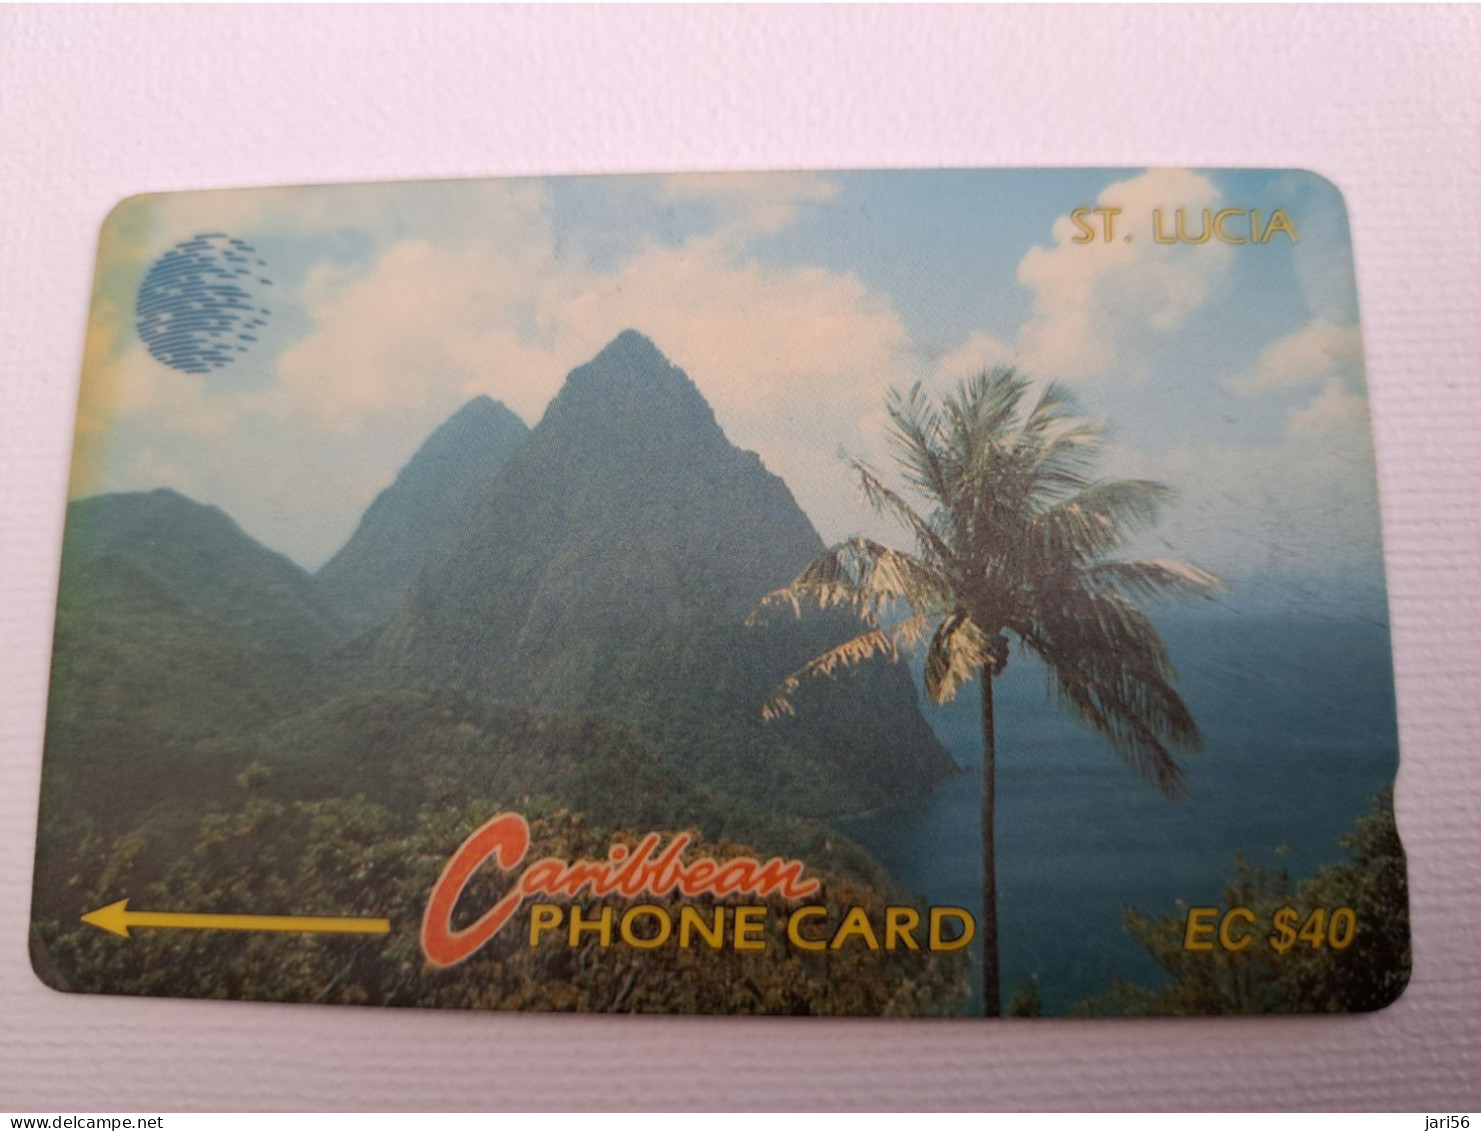 ST LUCIA    $ 40  CABLE & WIRELESS  STL-9C  9CSLC      Fine Used Card ** 13524** - Sainte Lucie